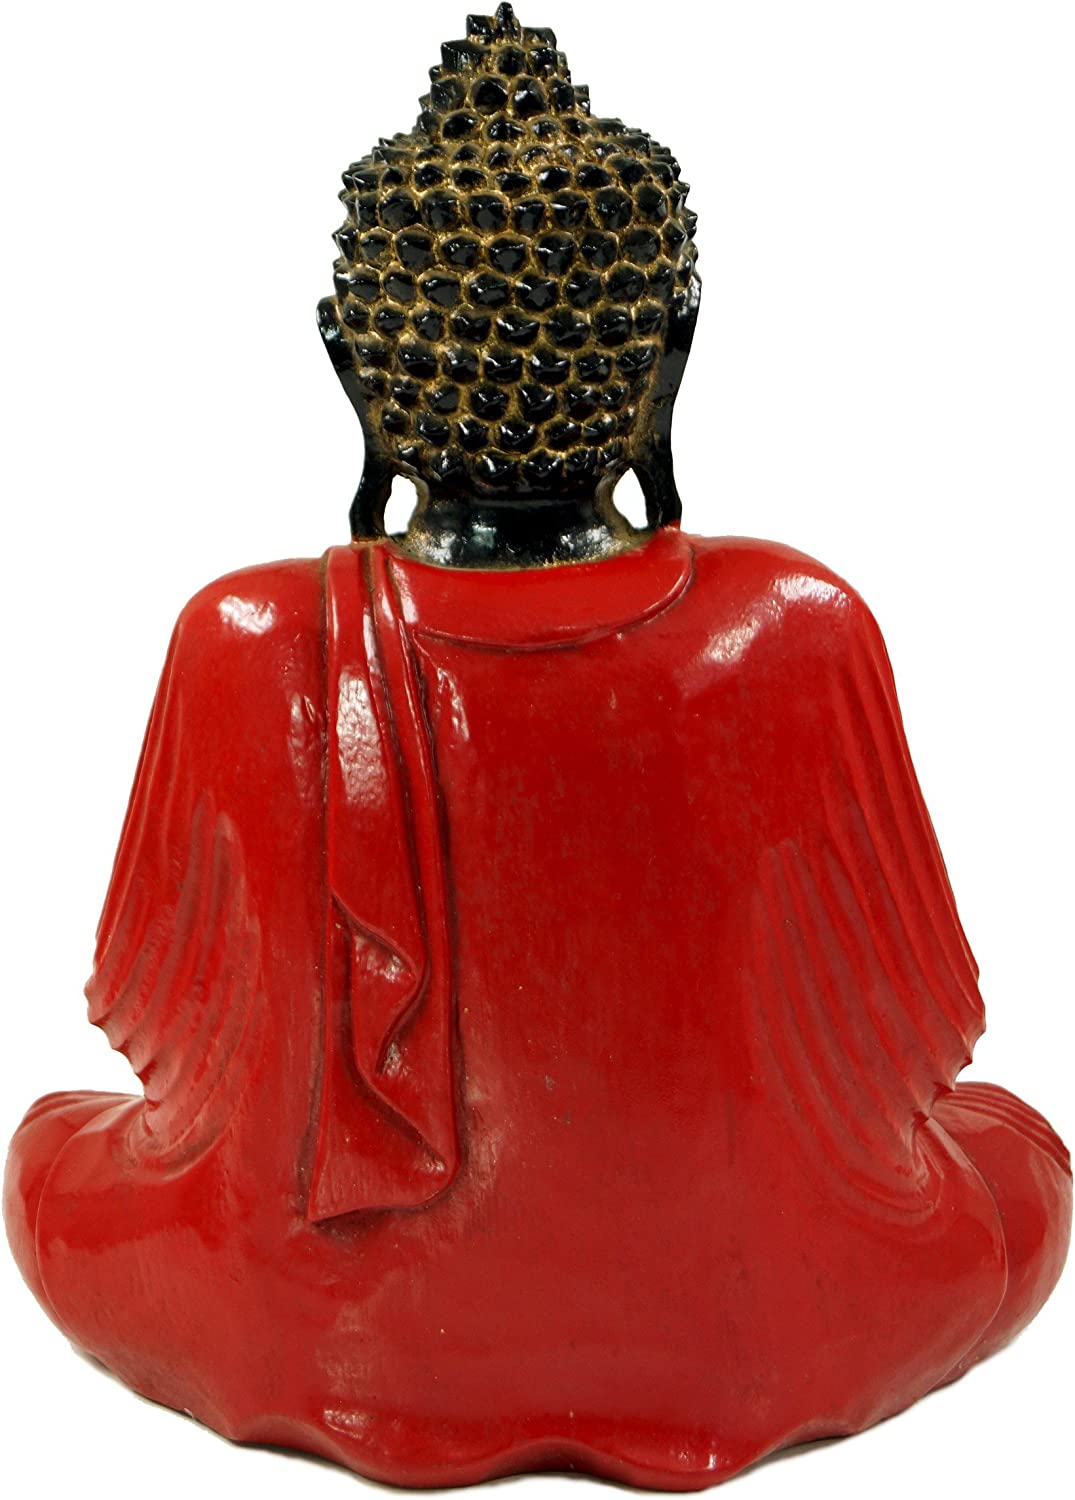 Guru-Shop GURU SHOP Carved Sitting Buddha in Anjali Mudra - Red, 30 x 25 x 13 cm, Buddha